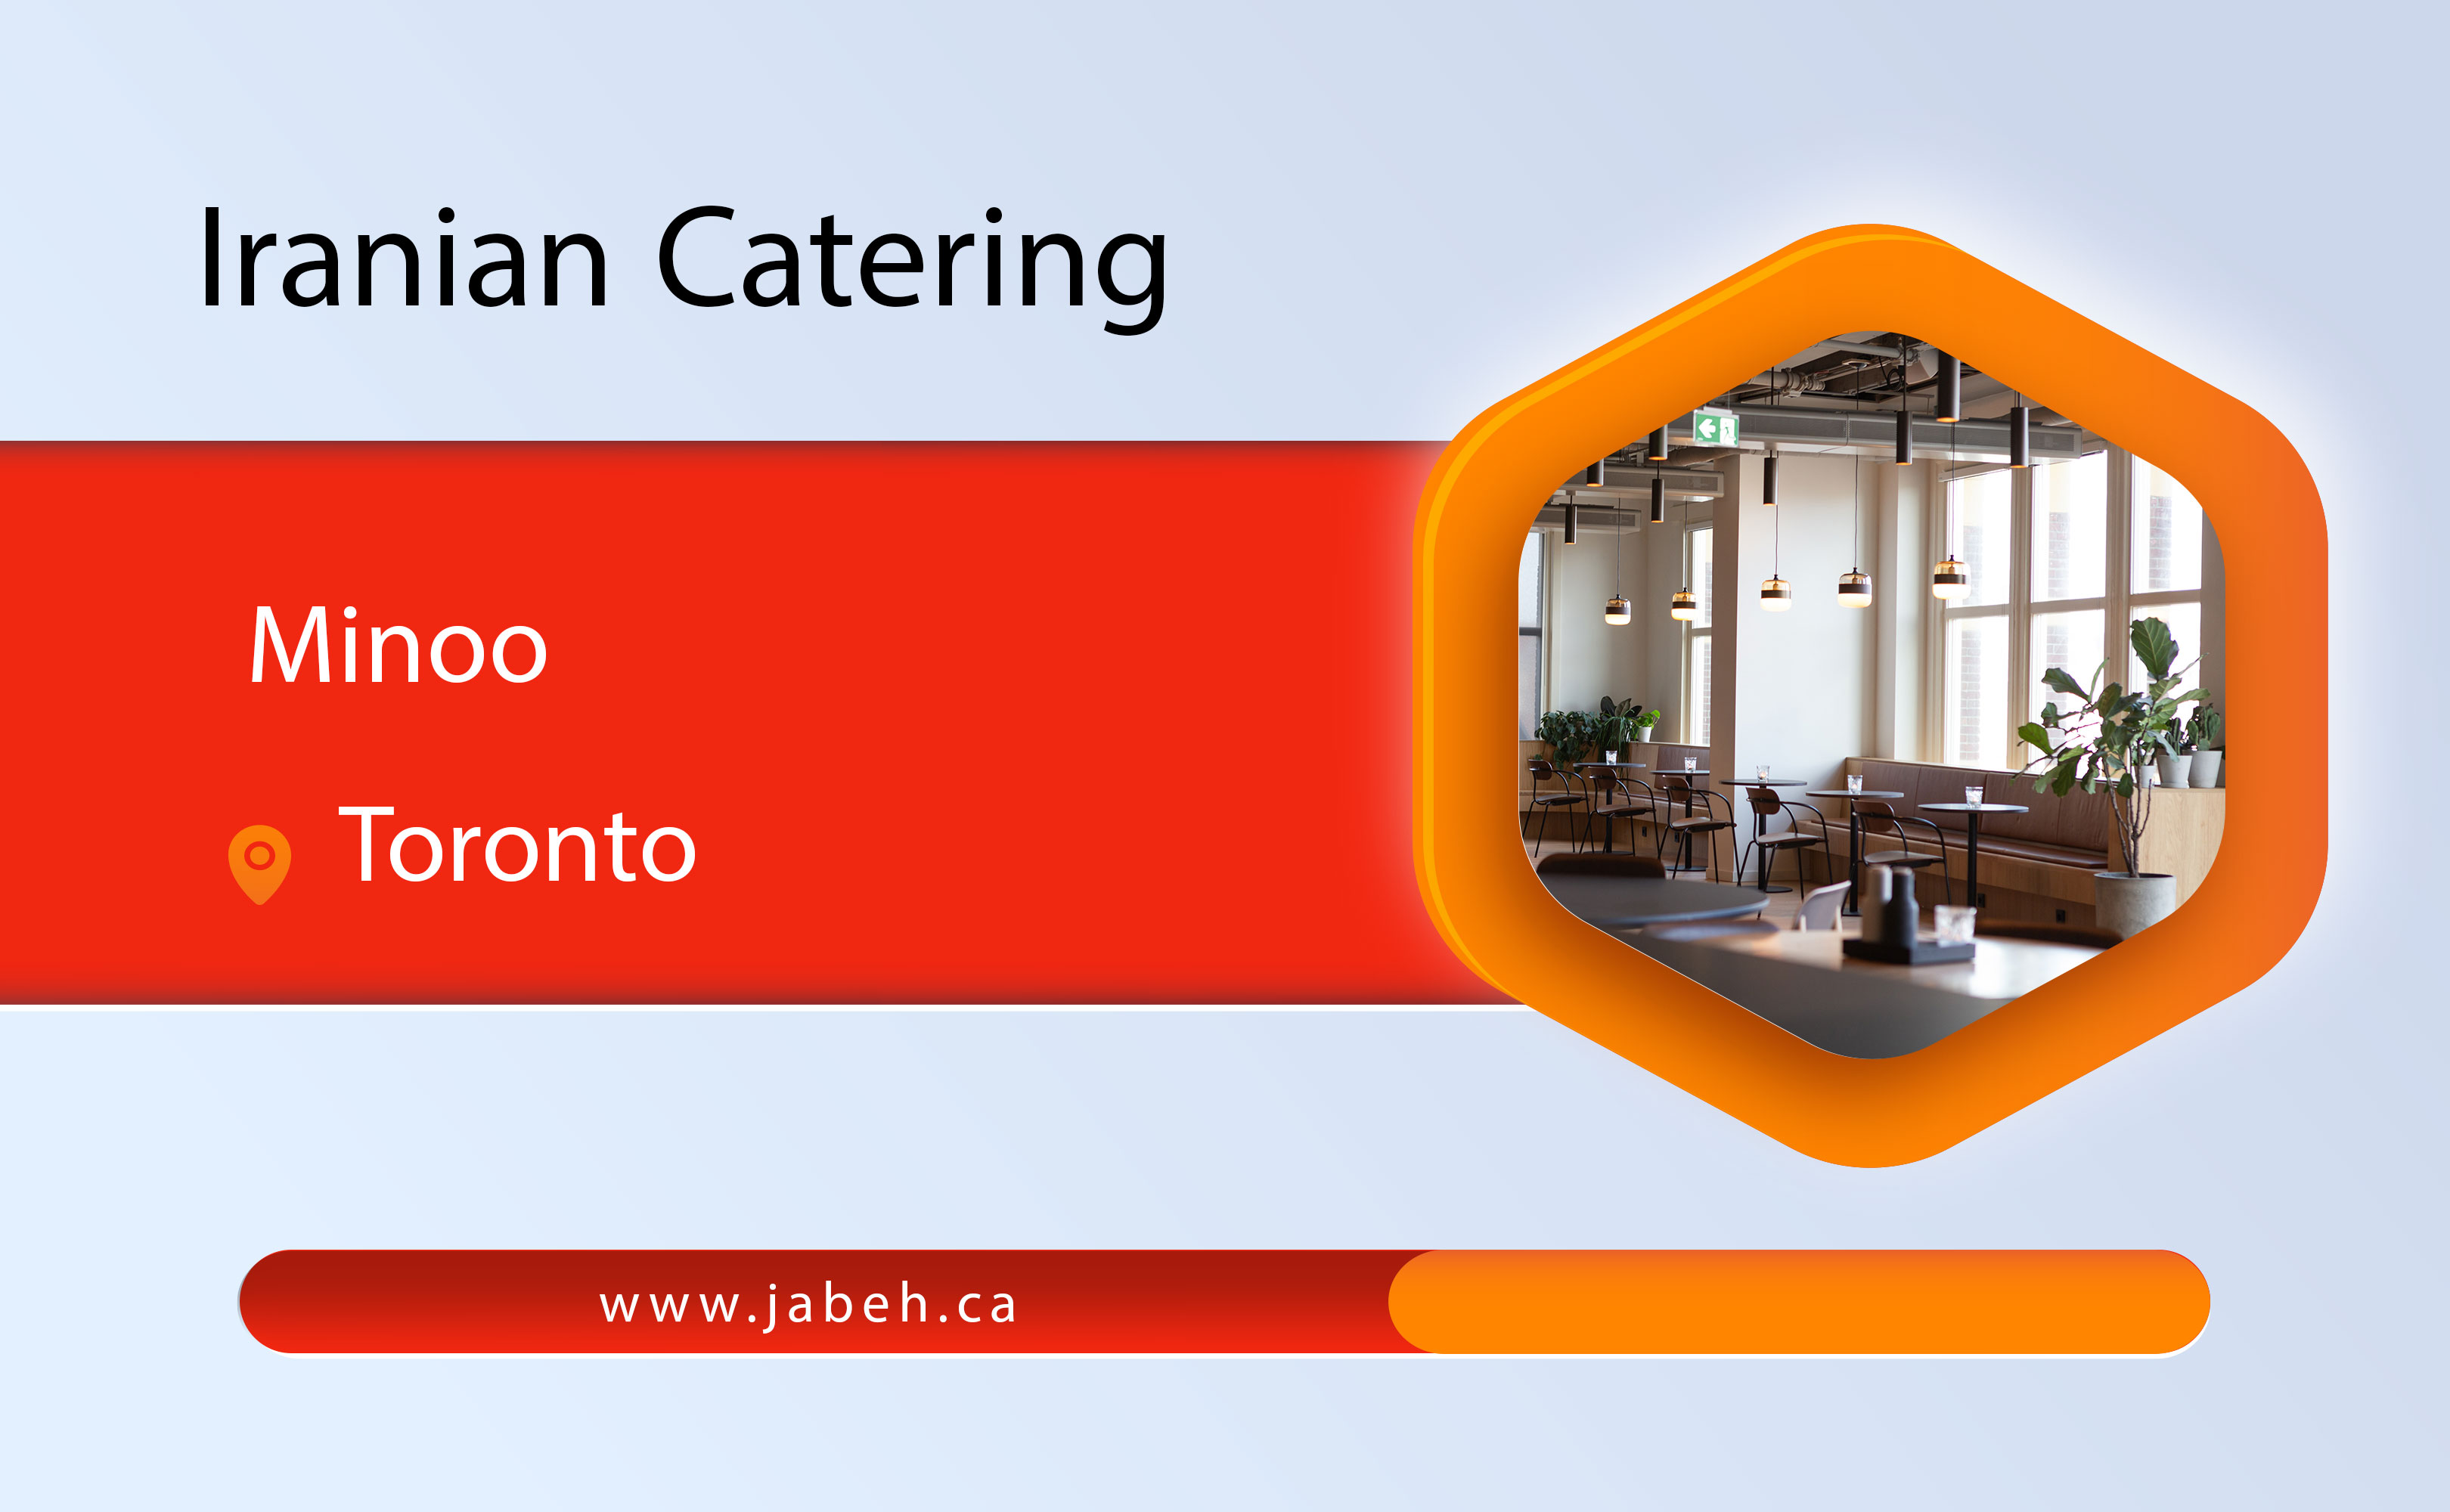 Mino Iranian catering in Toronto